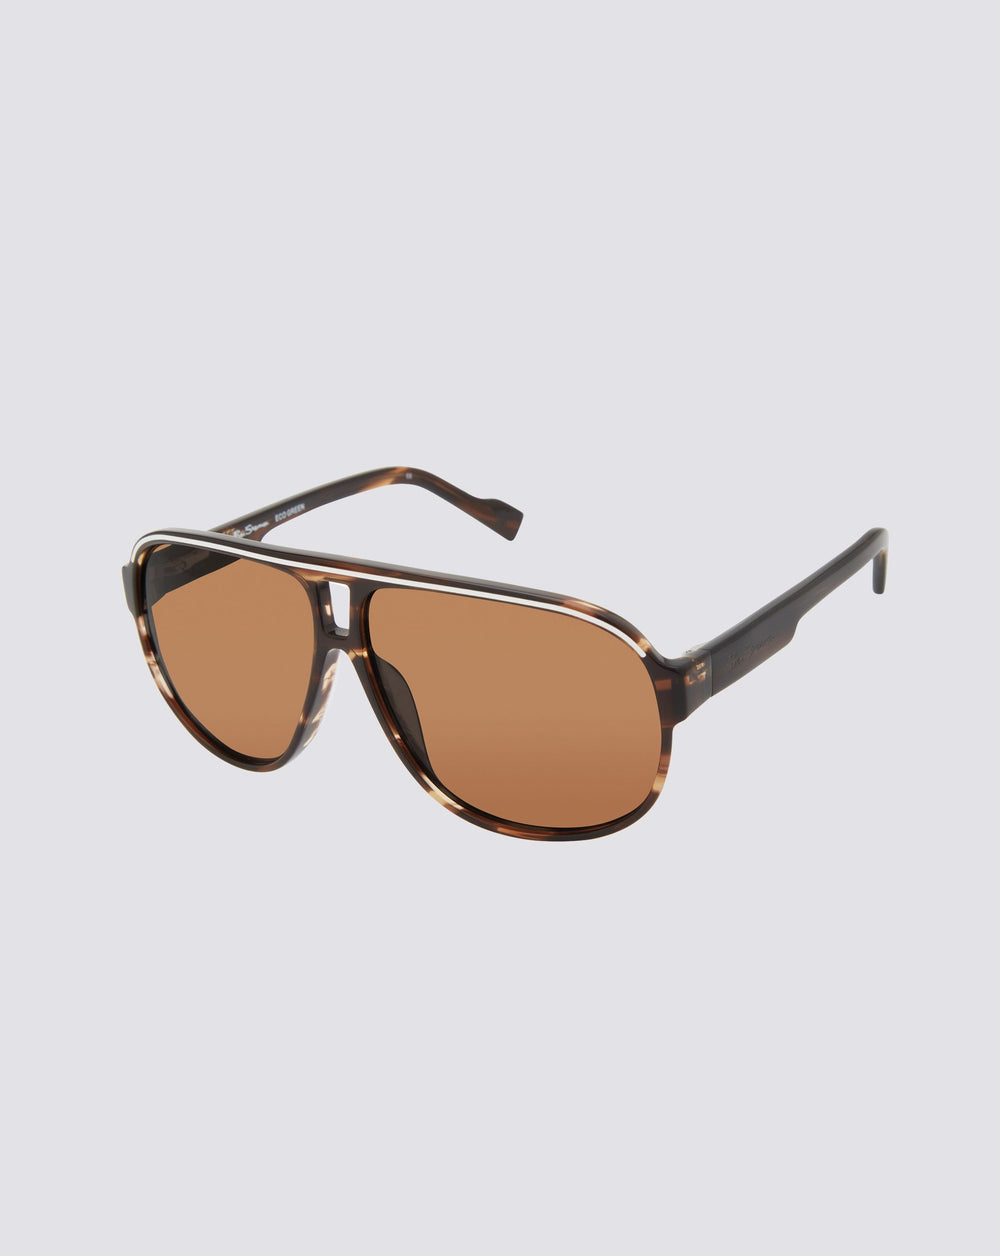 London Polarized Oversized Eco Sunglasses - Tortoise - Ben Sherman